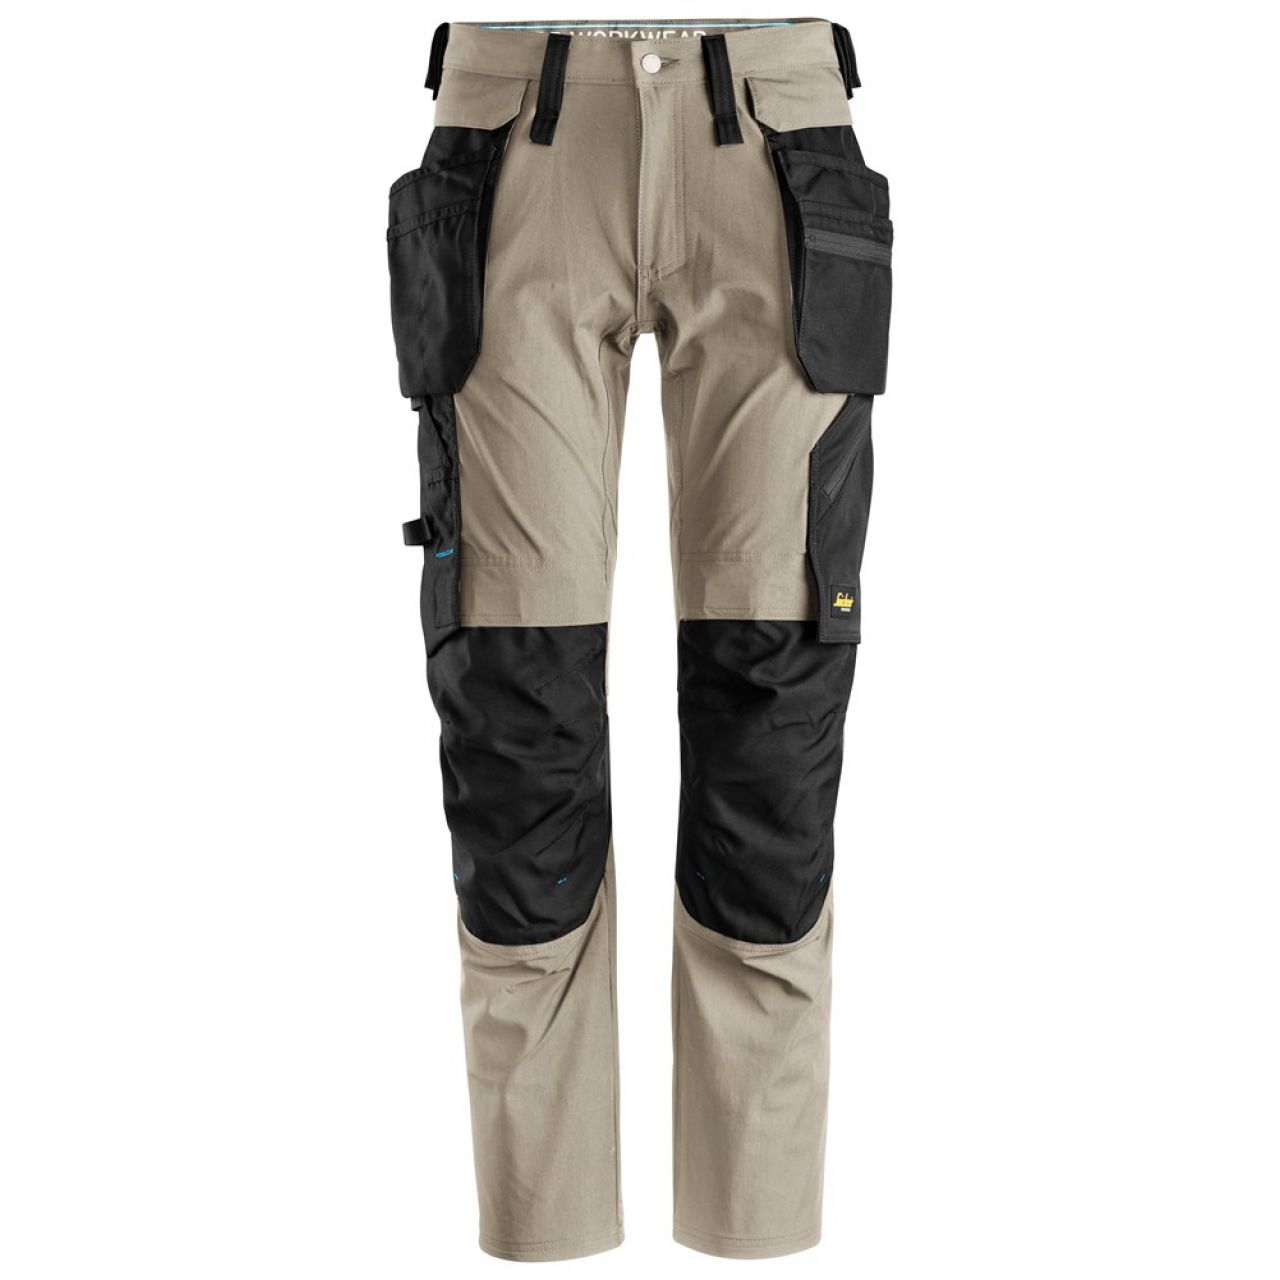 6208 Pantalones largos de trabajo con bolsillos flotantes desmontables LiteWork beige-negro talla 104